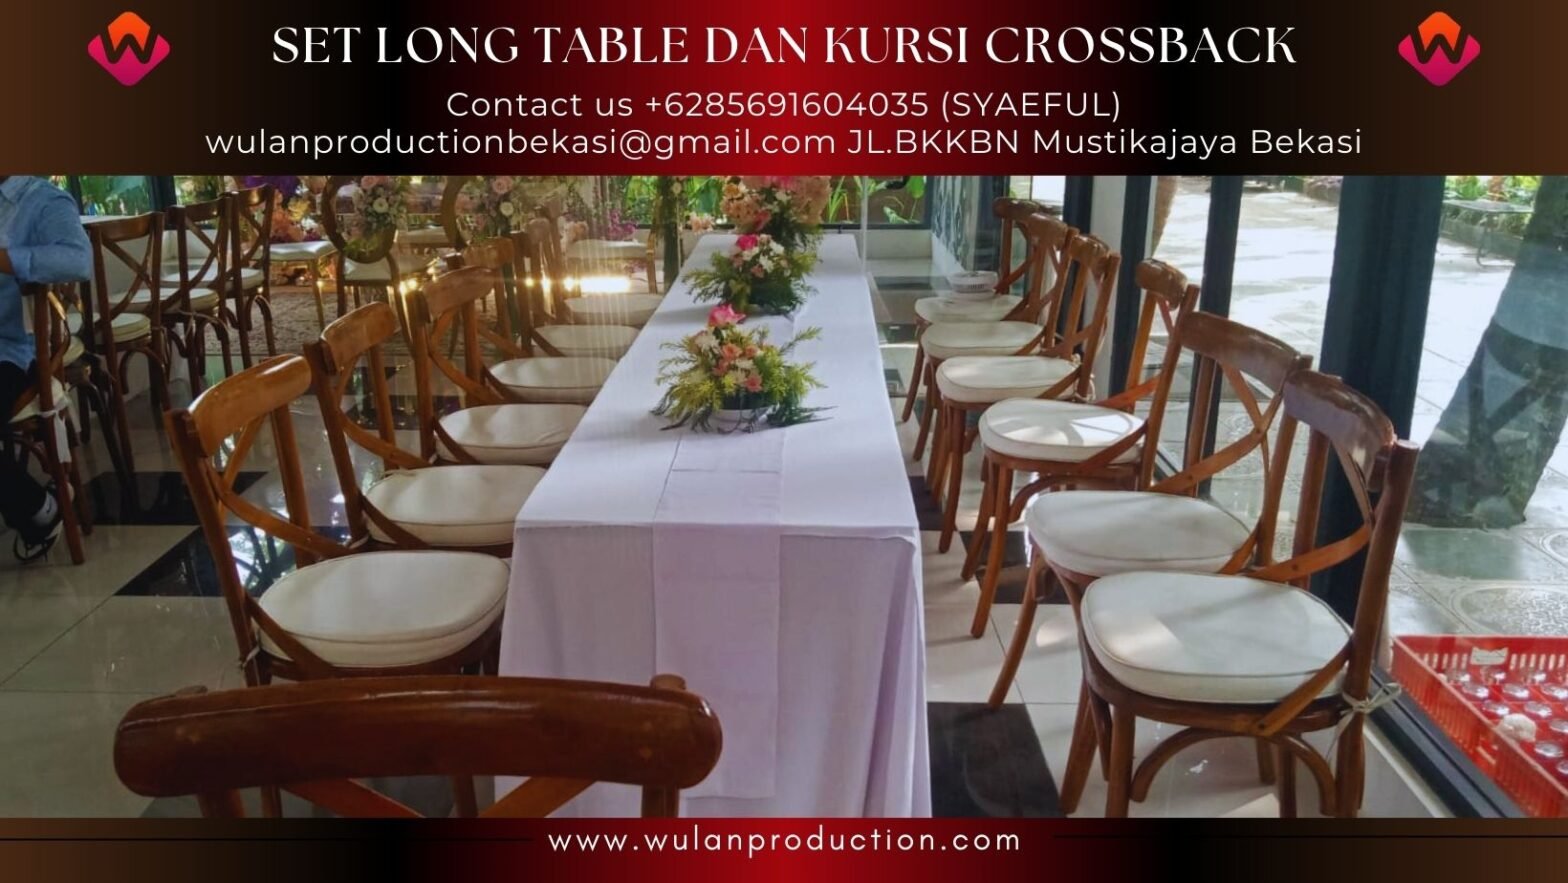 Layanan Sewa Set Long Table dan Kursi Crossback Jakarta